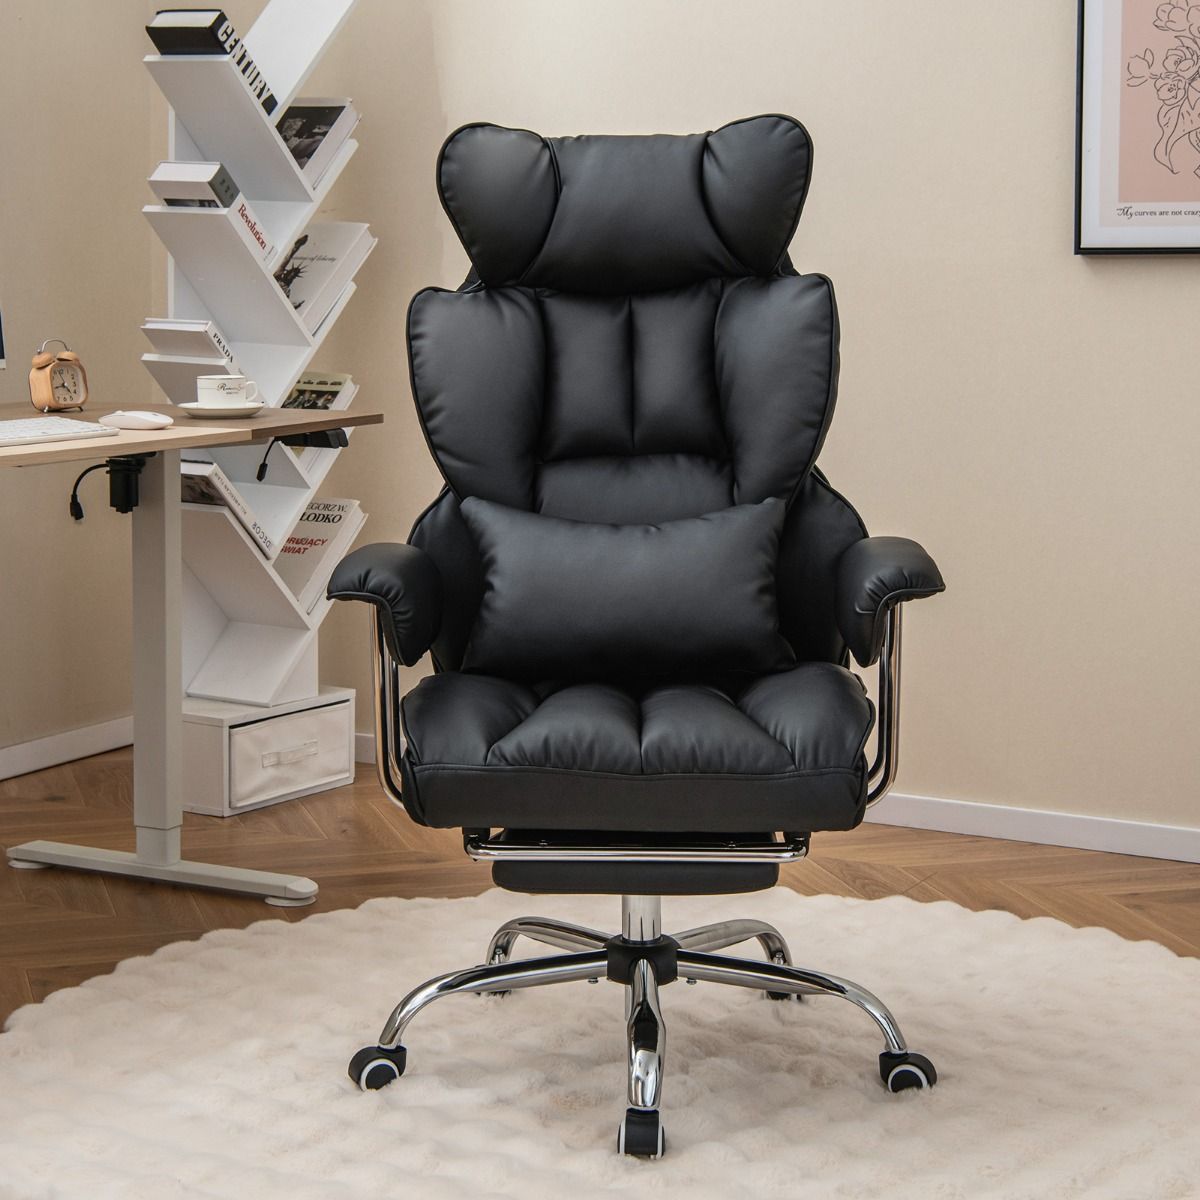 Ergonomic High Back Office Chair Executive Computer Desk Chair Black